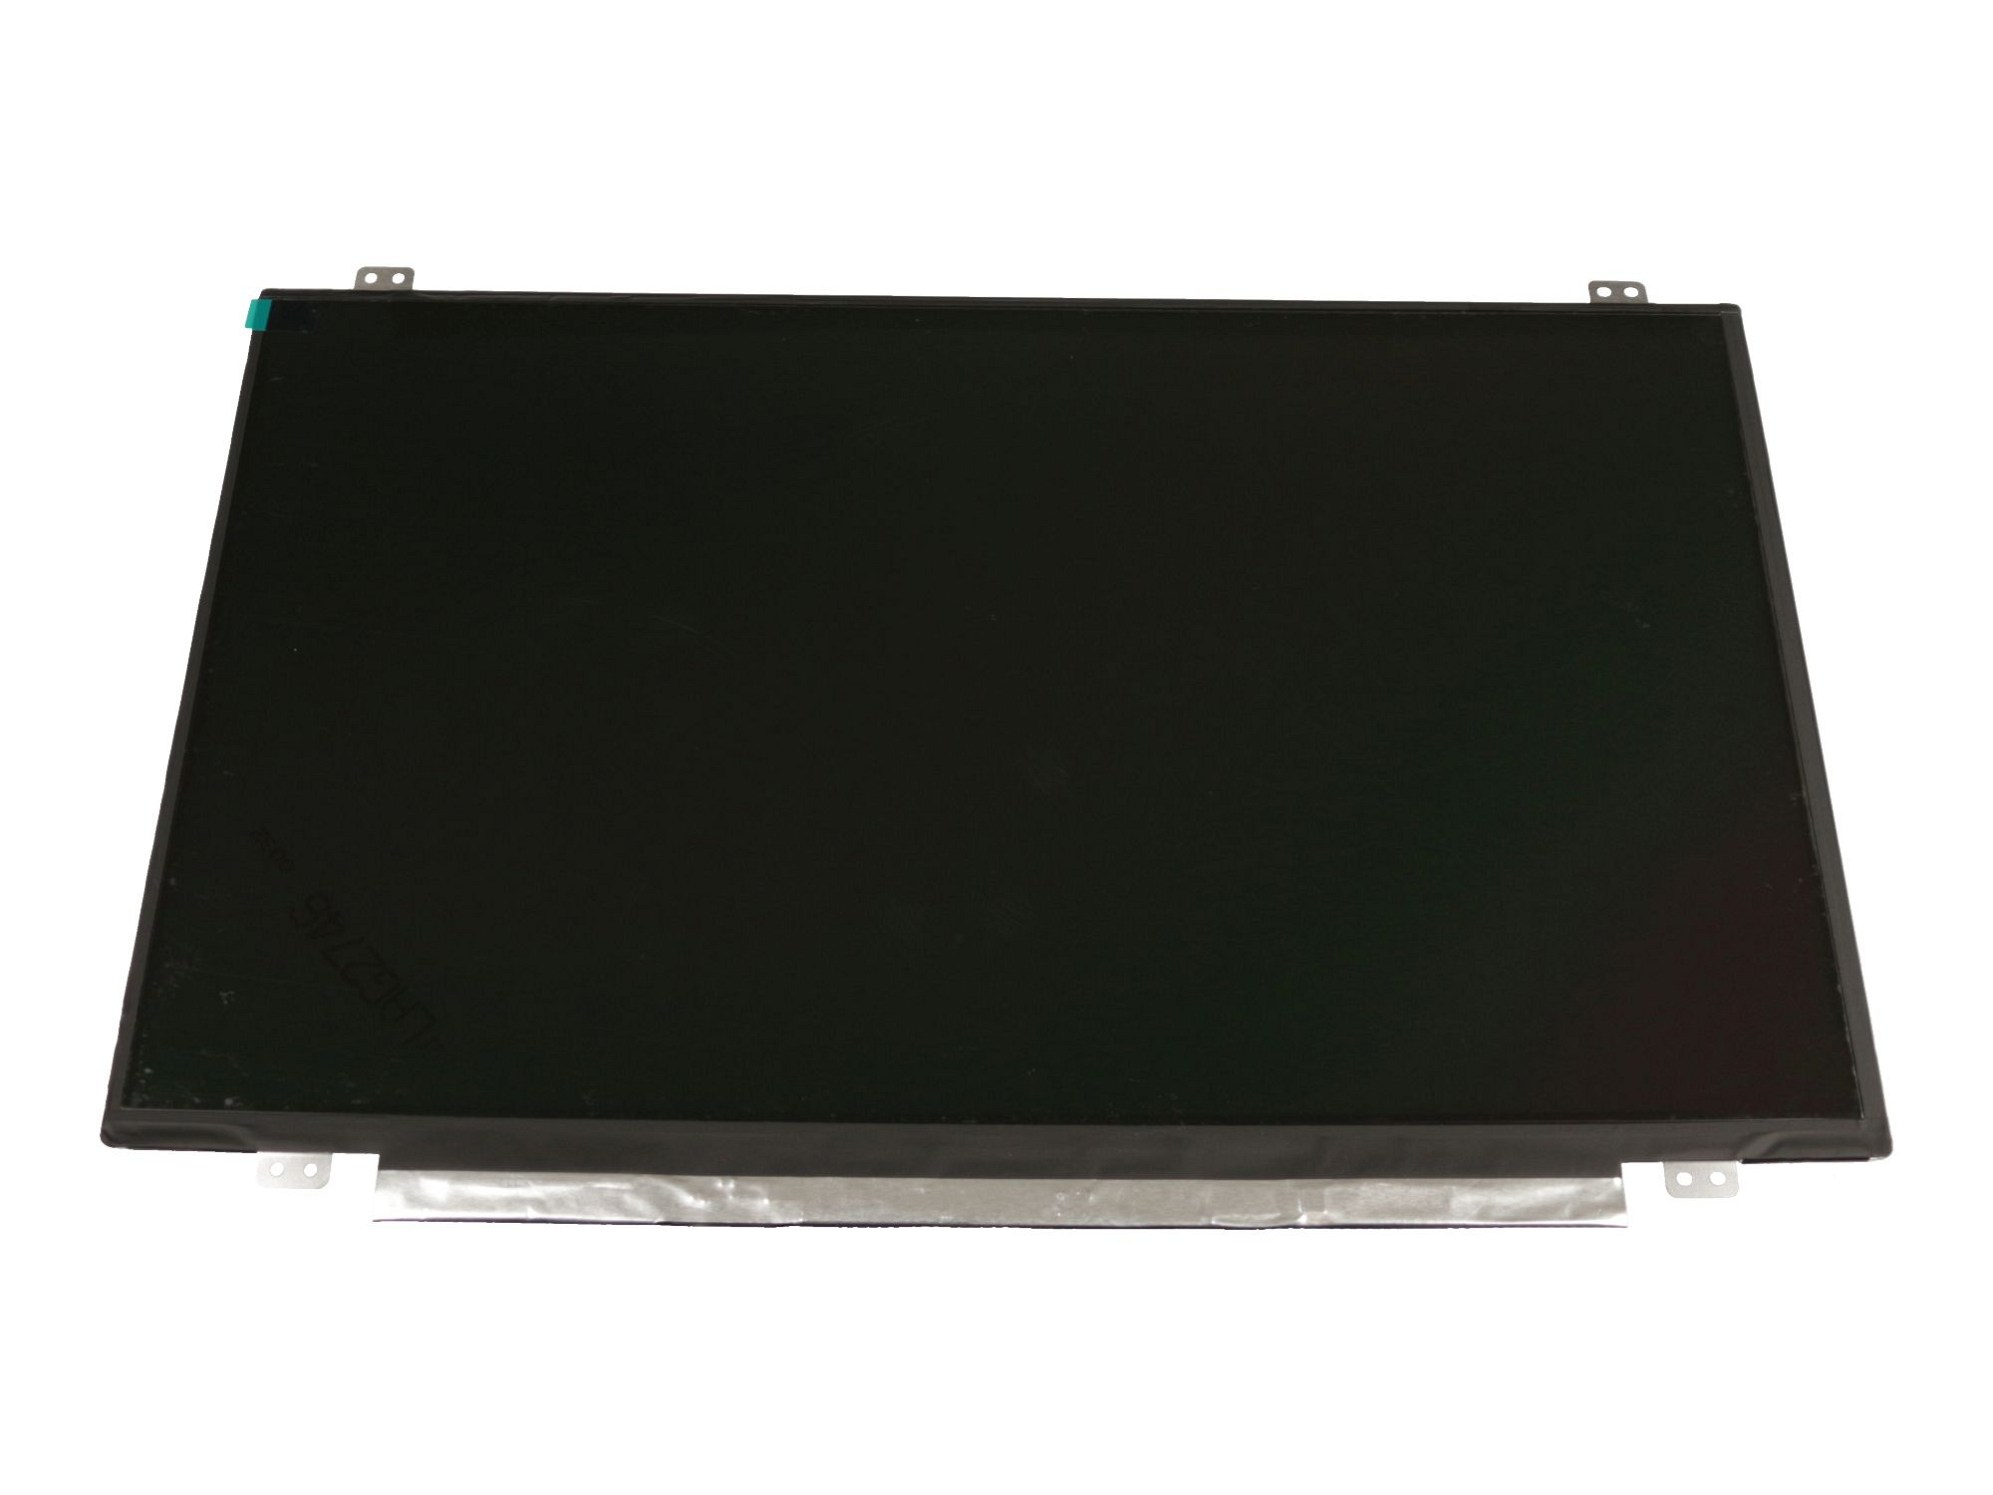 LG LP140WH2-TPT1 Display (1366x768) matt slimline